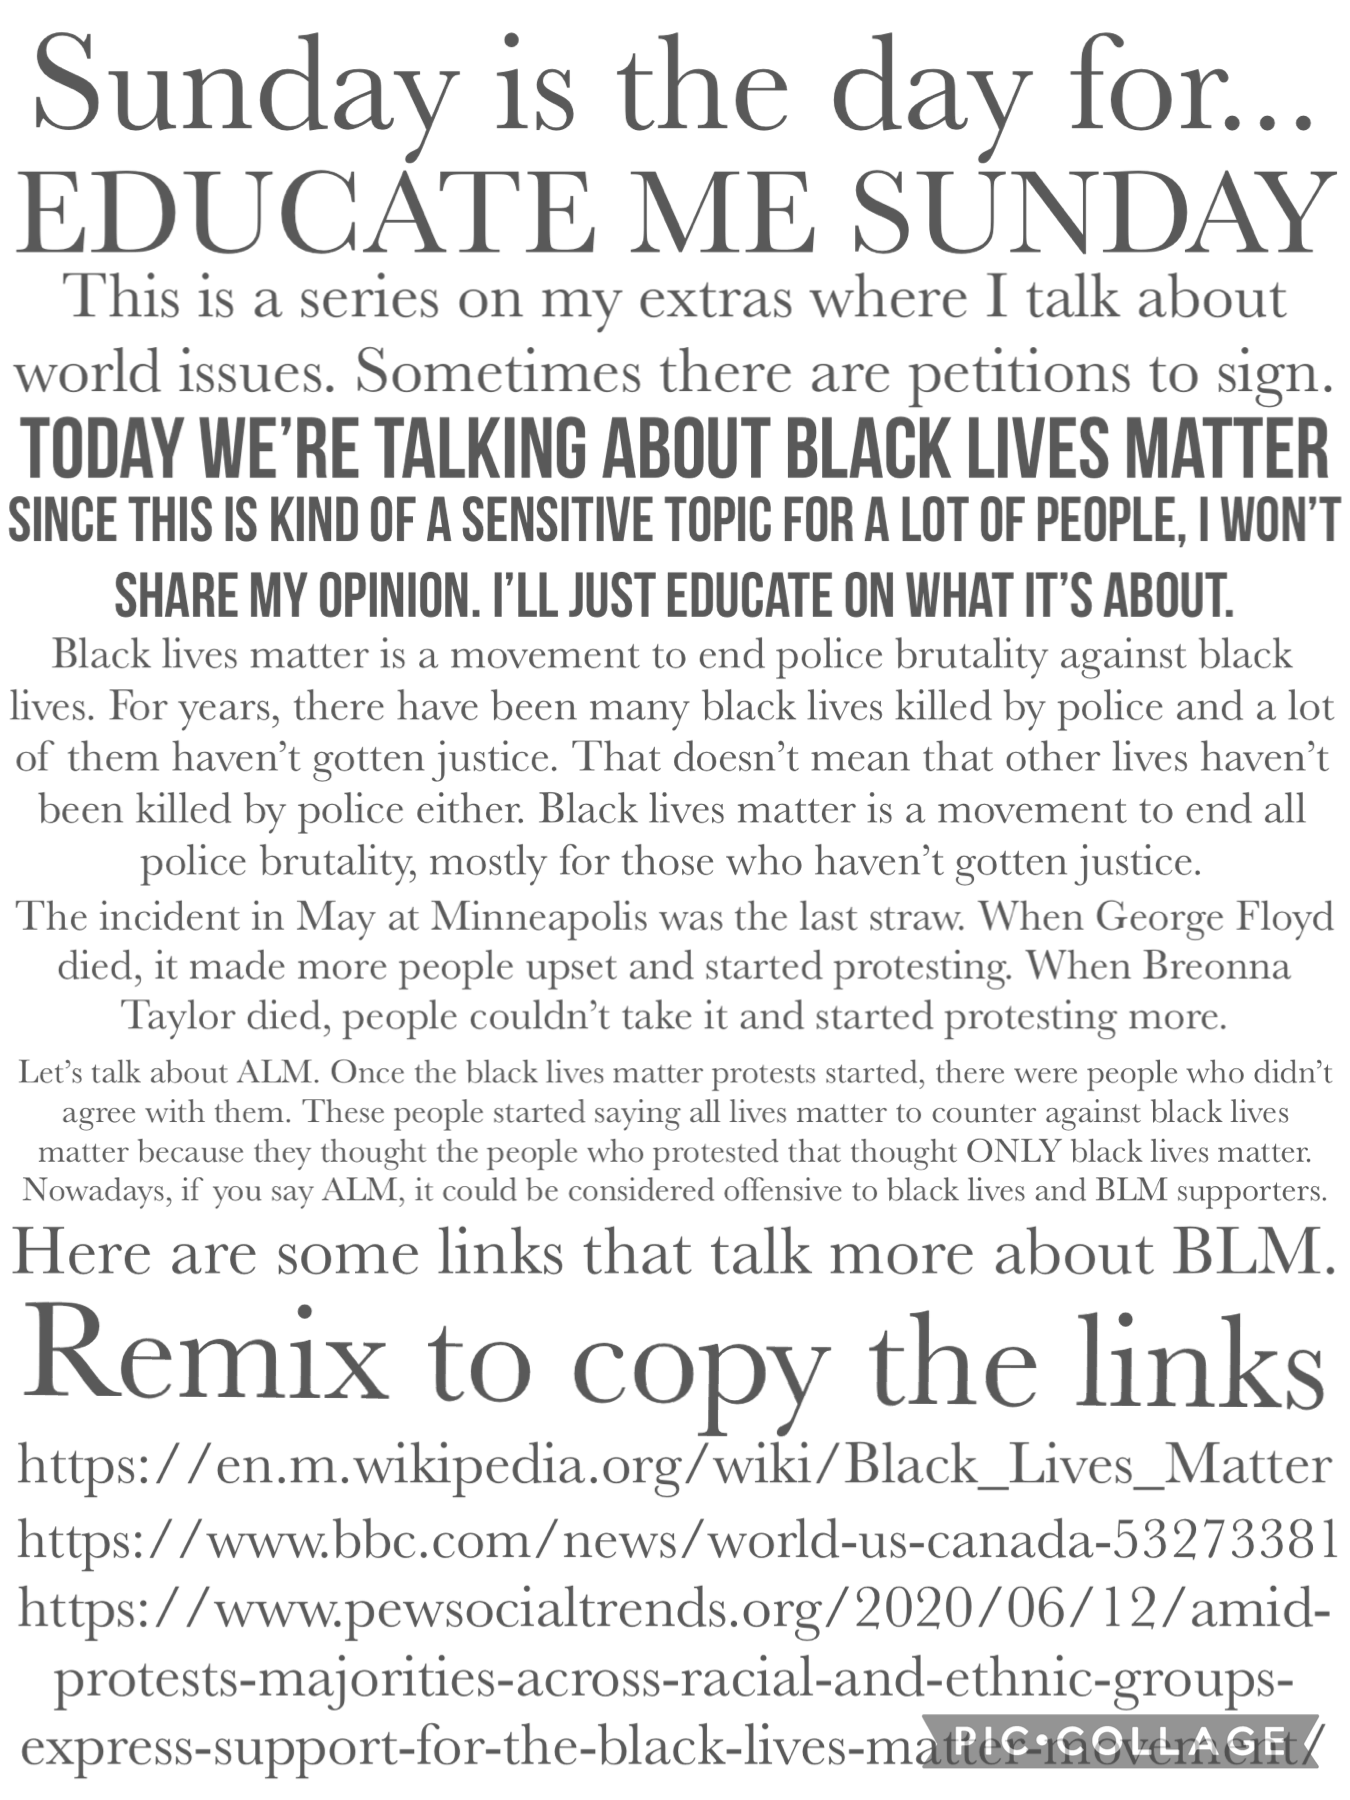 Educate Me Sunday, February 7th: Black Lives Matter